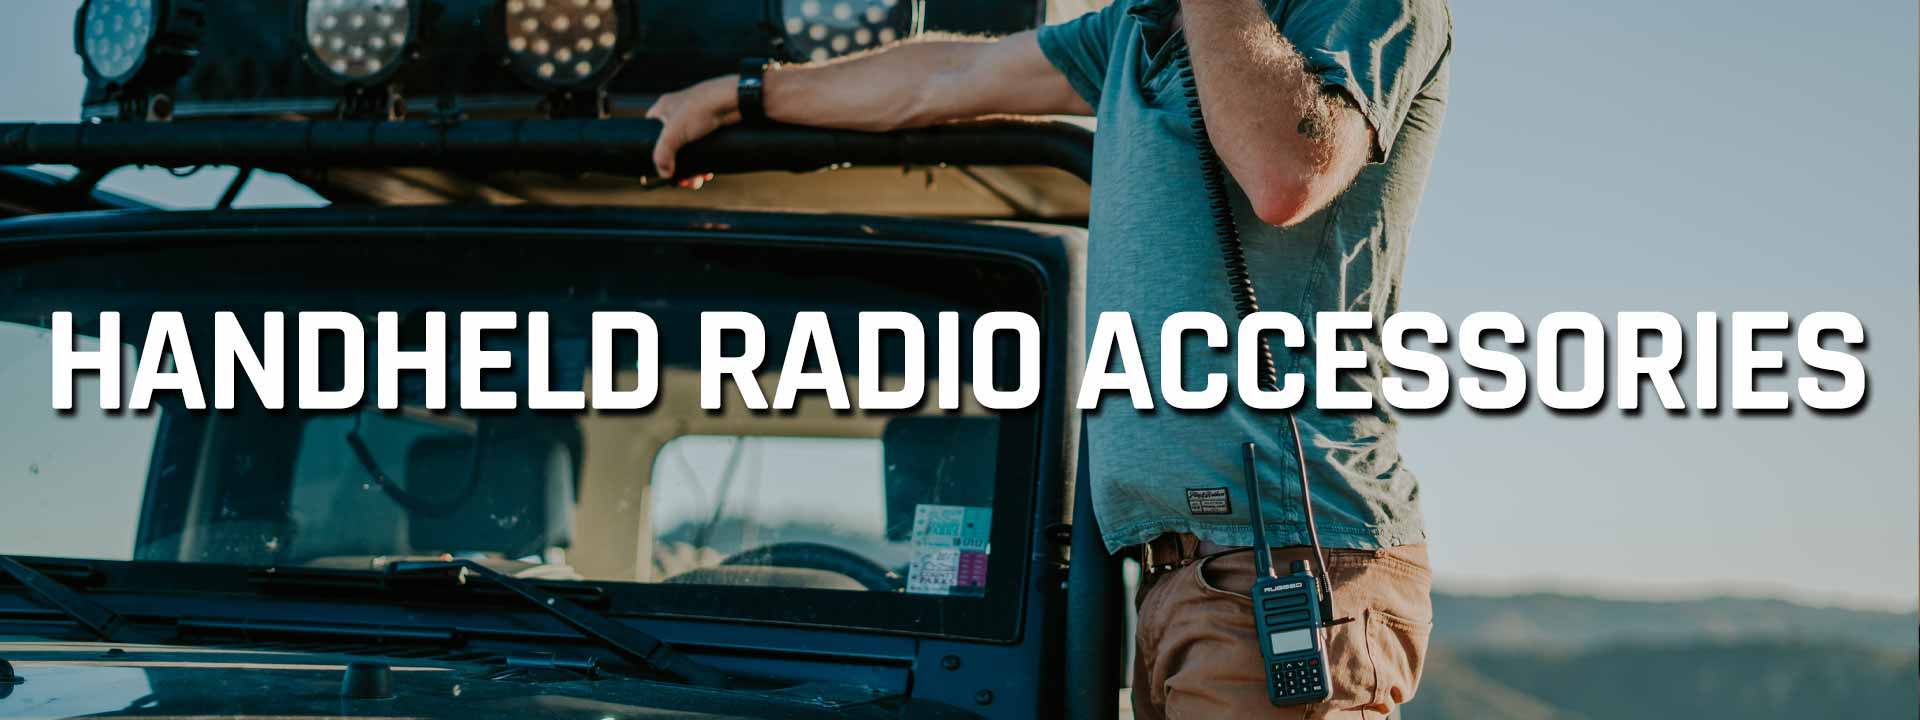 Handheld 2-way radio accessories